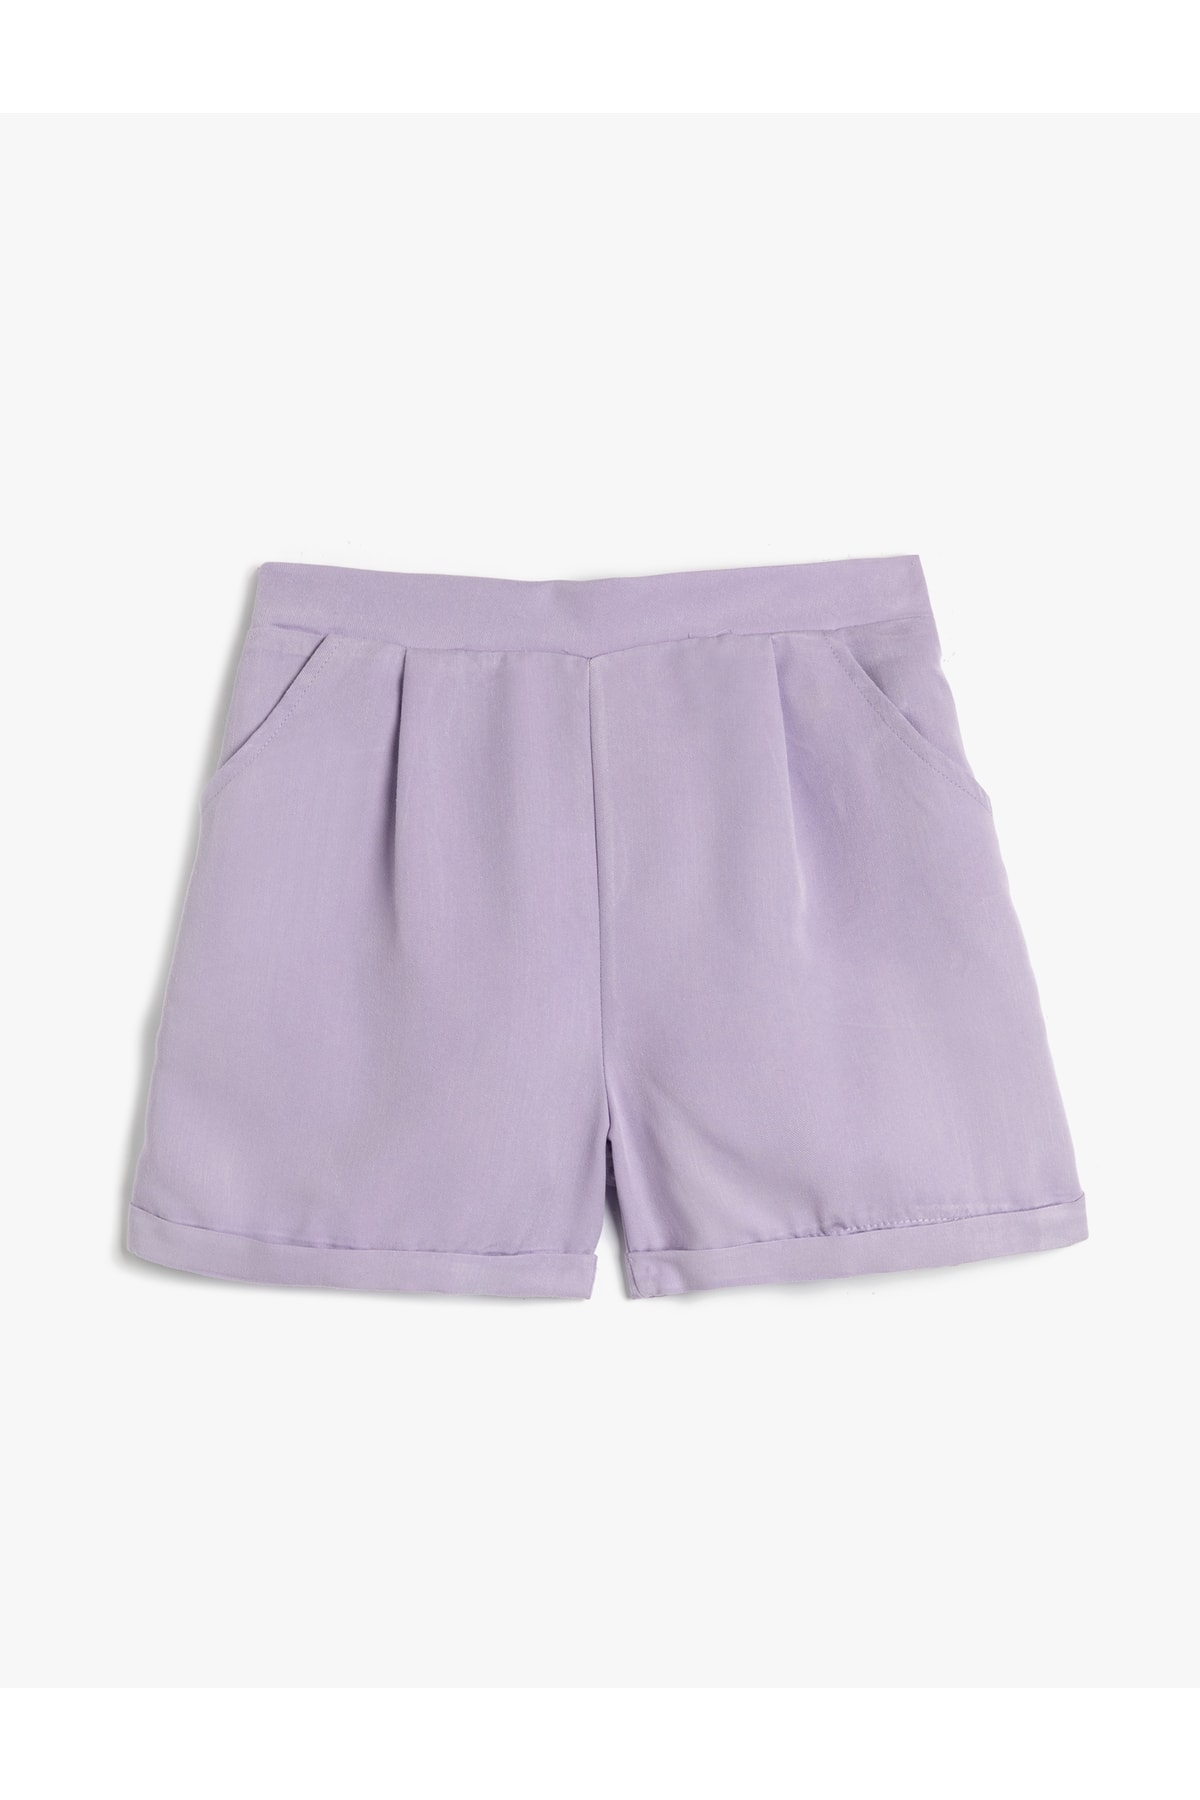 Levně Koton The shorts have an elasticated waist, Modal Fabric, Pocket Pleat Detailed.